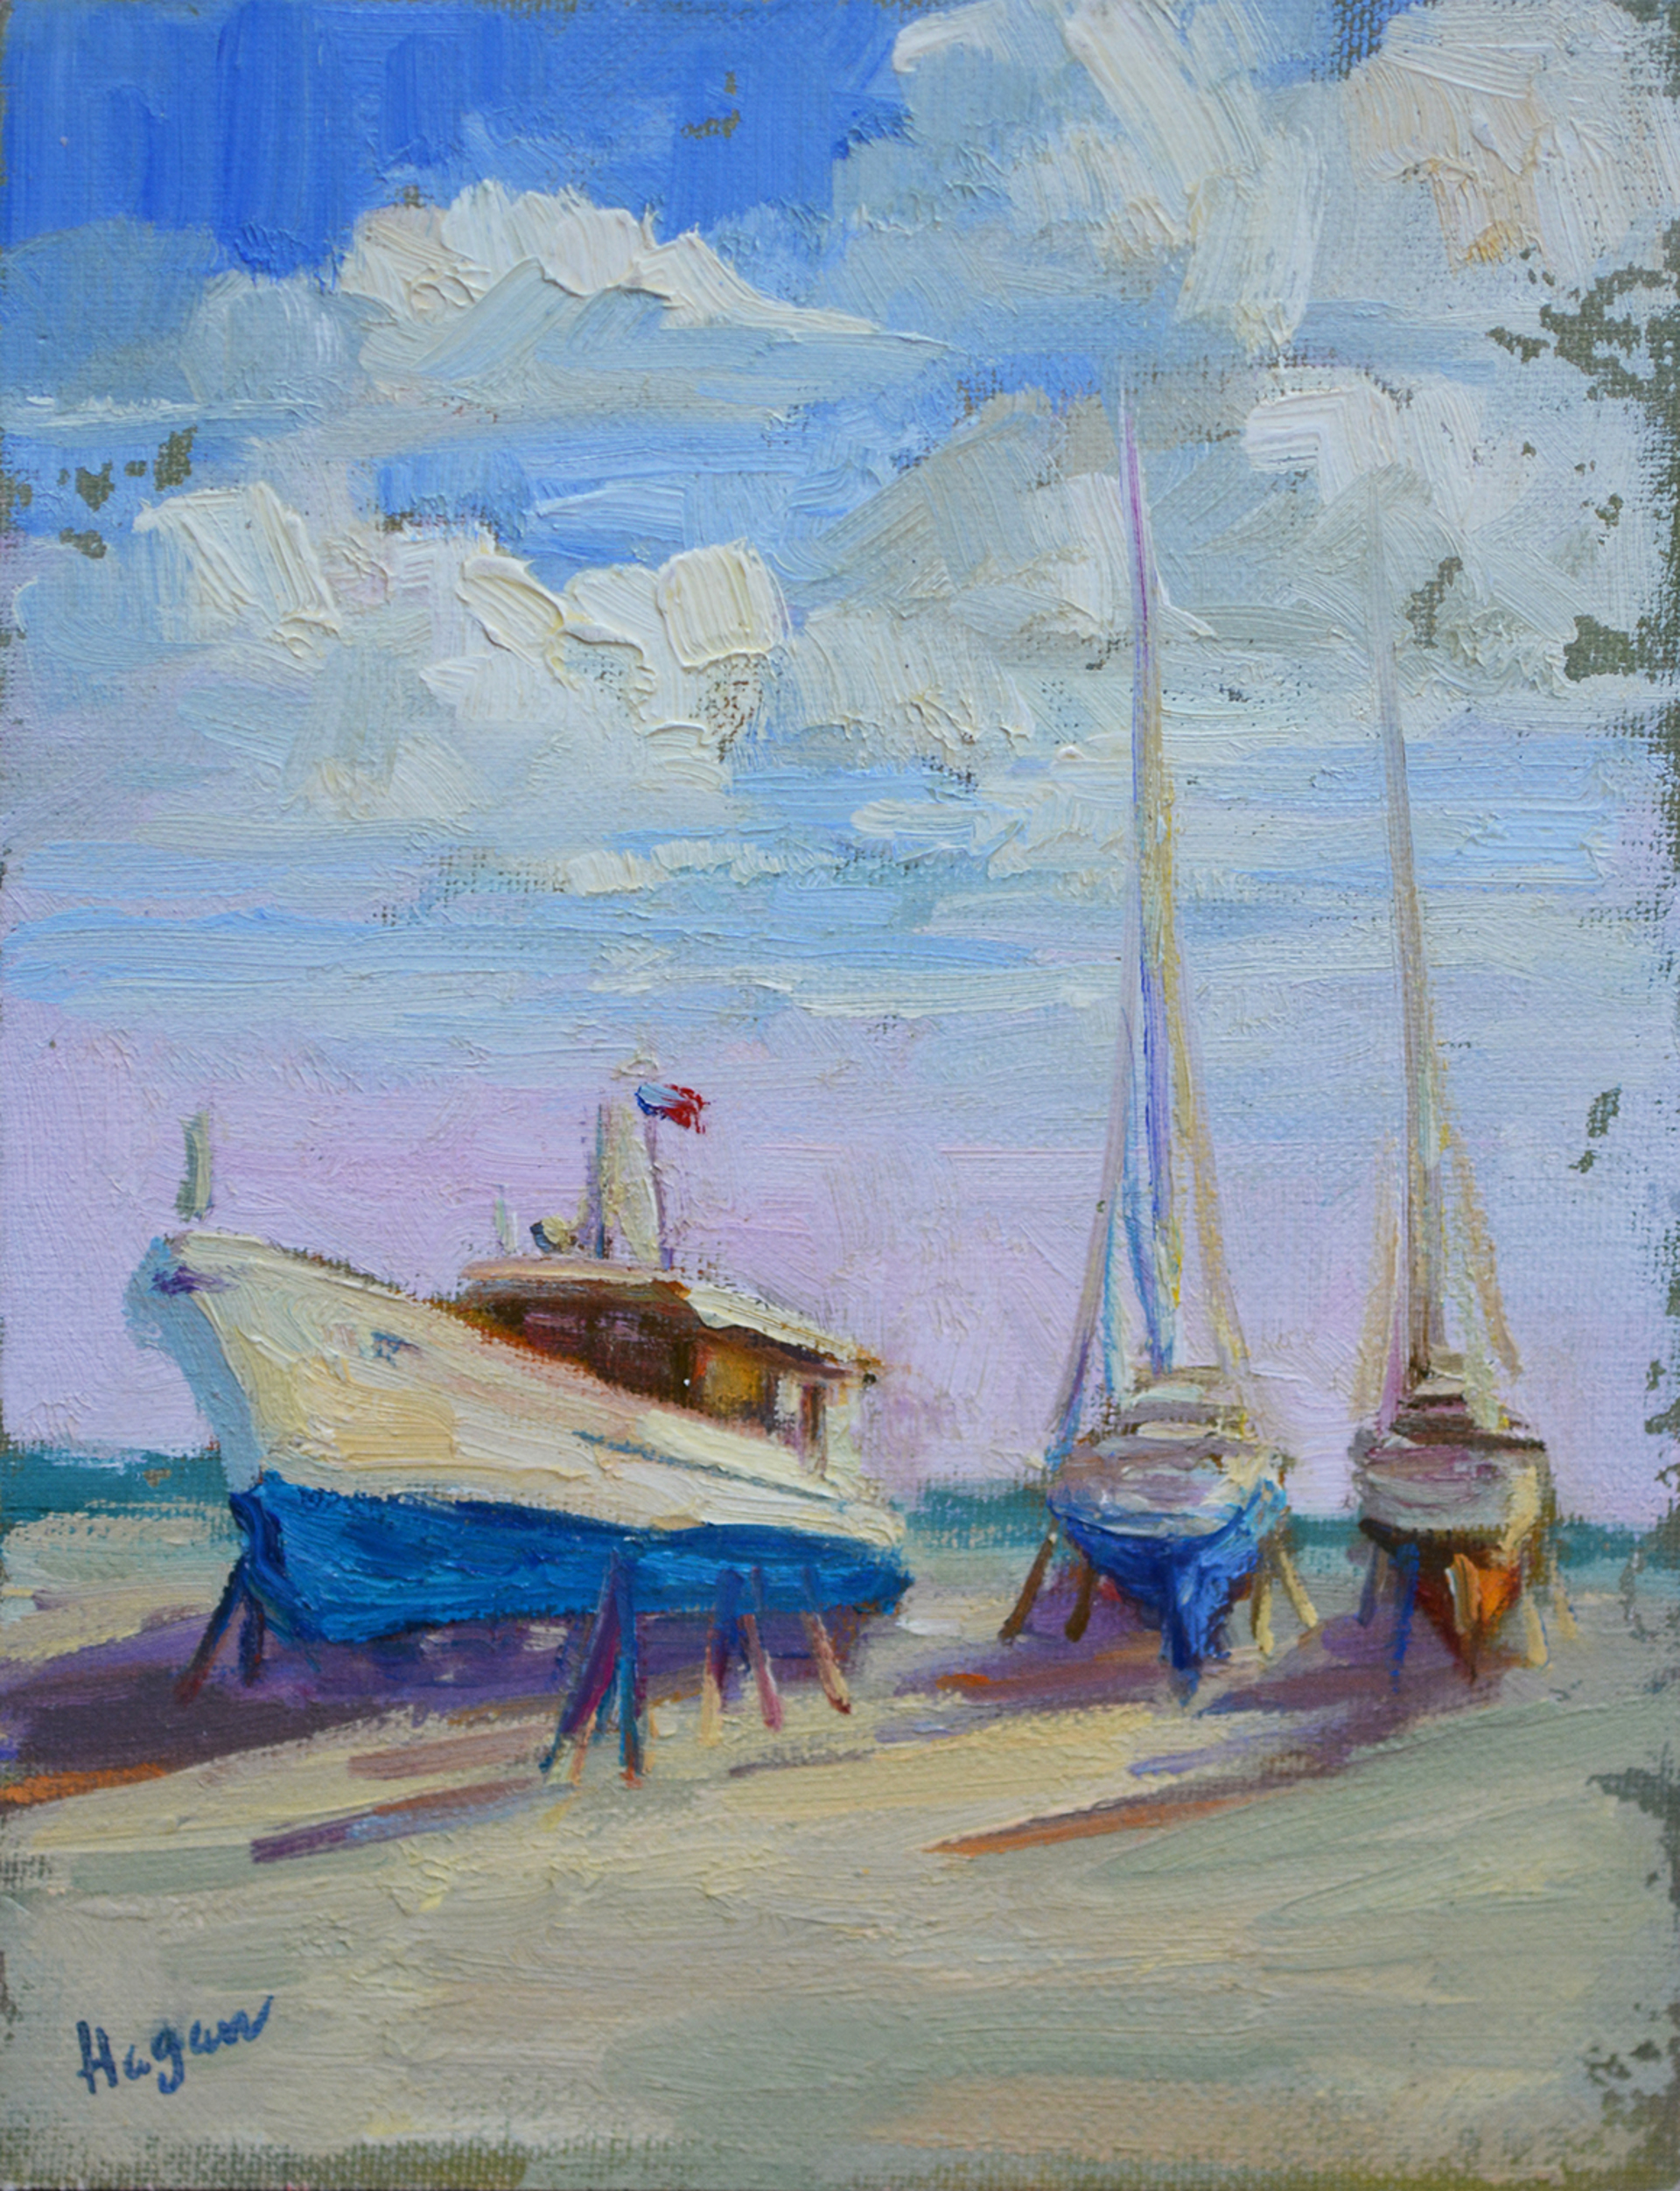 Boatyard Blues by Karen Hewitt Hagan